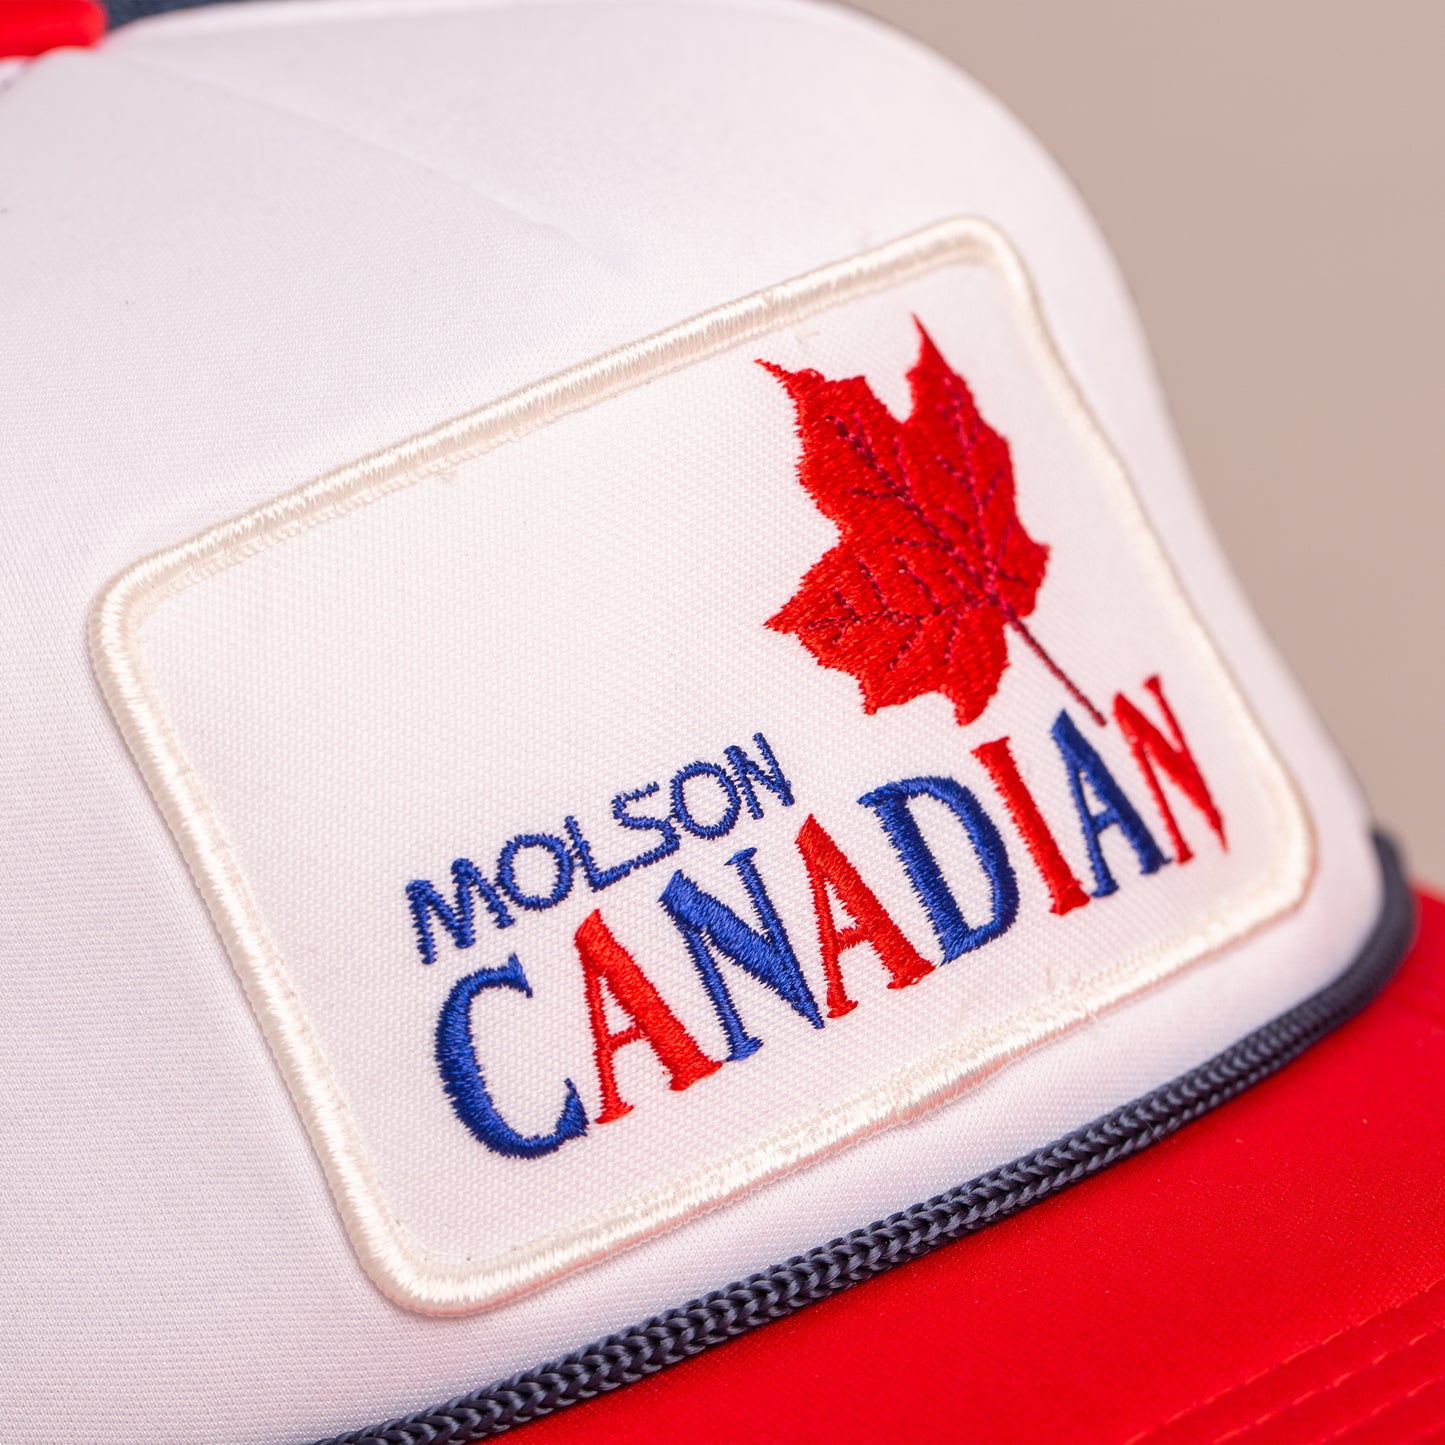 Molson Canadian